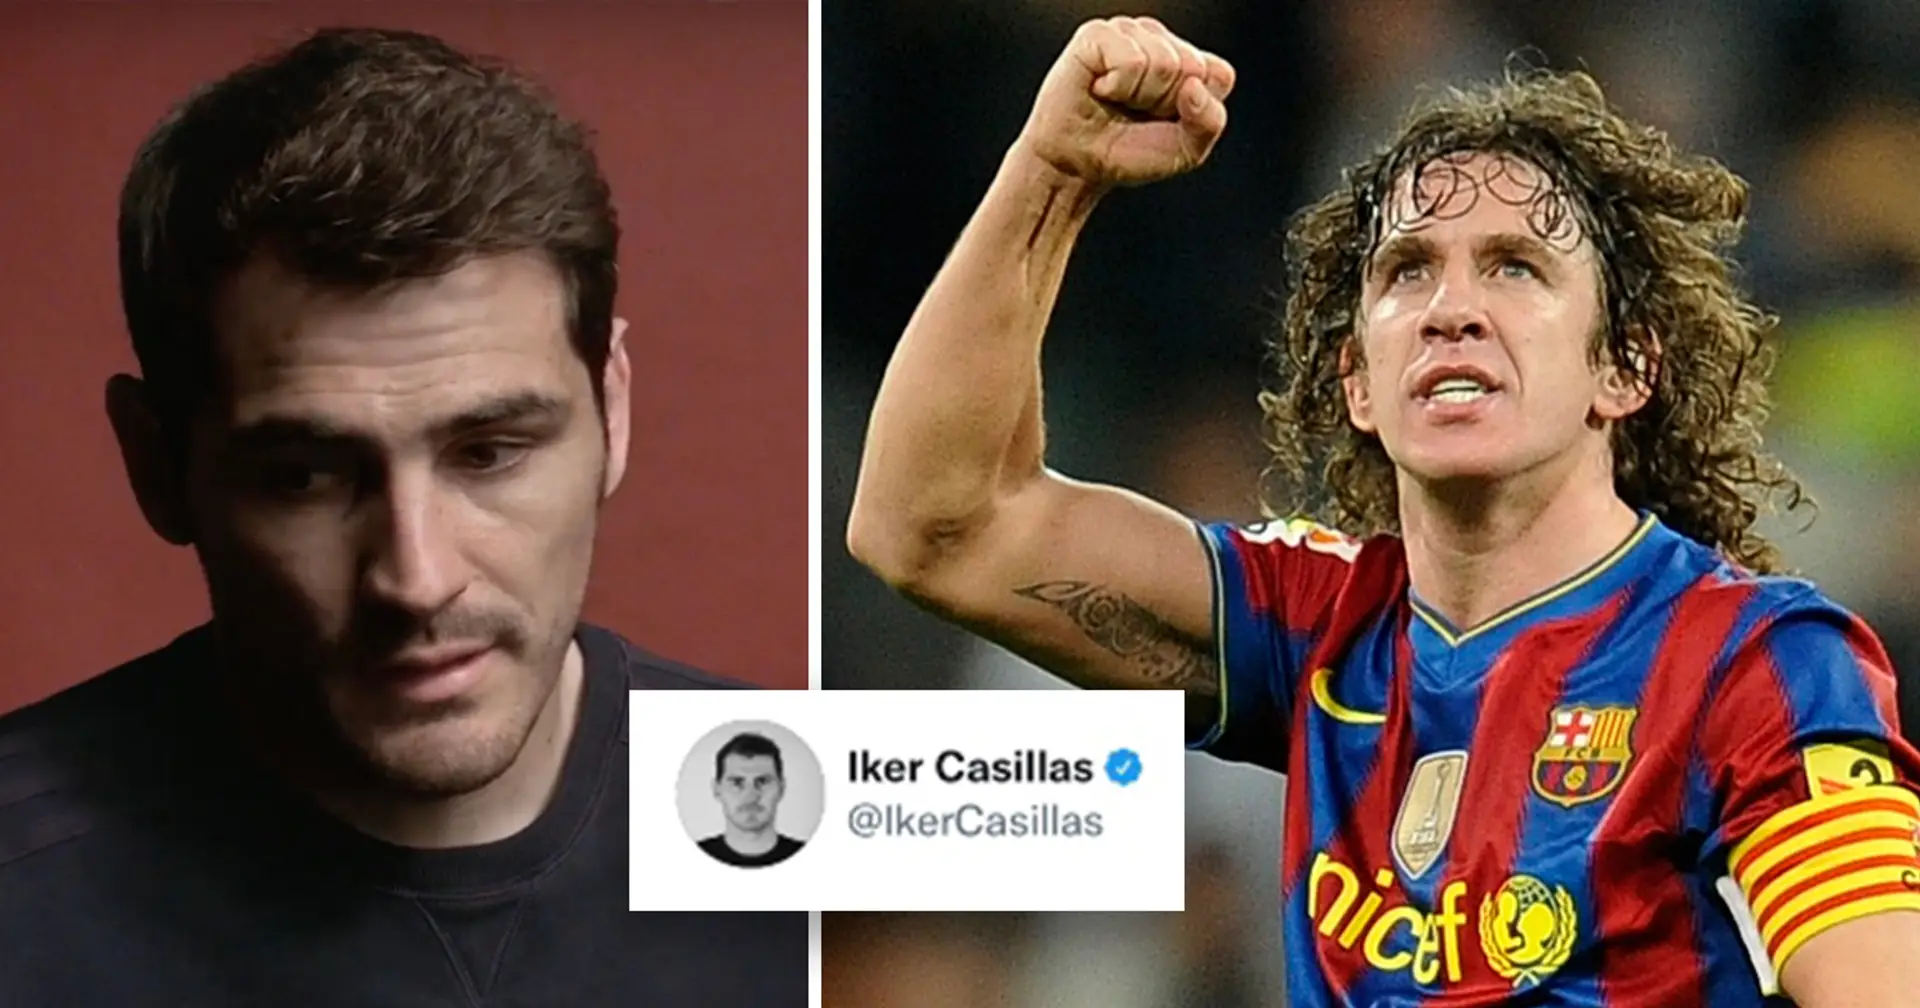 "È tempo di raccontare la nostra storia, Iker": Iker Casillas si dichiara gay, immediata la reazione di Carles Puyol